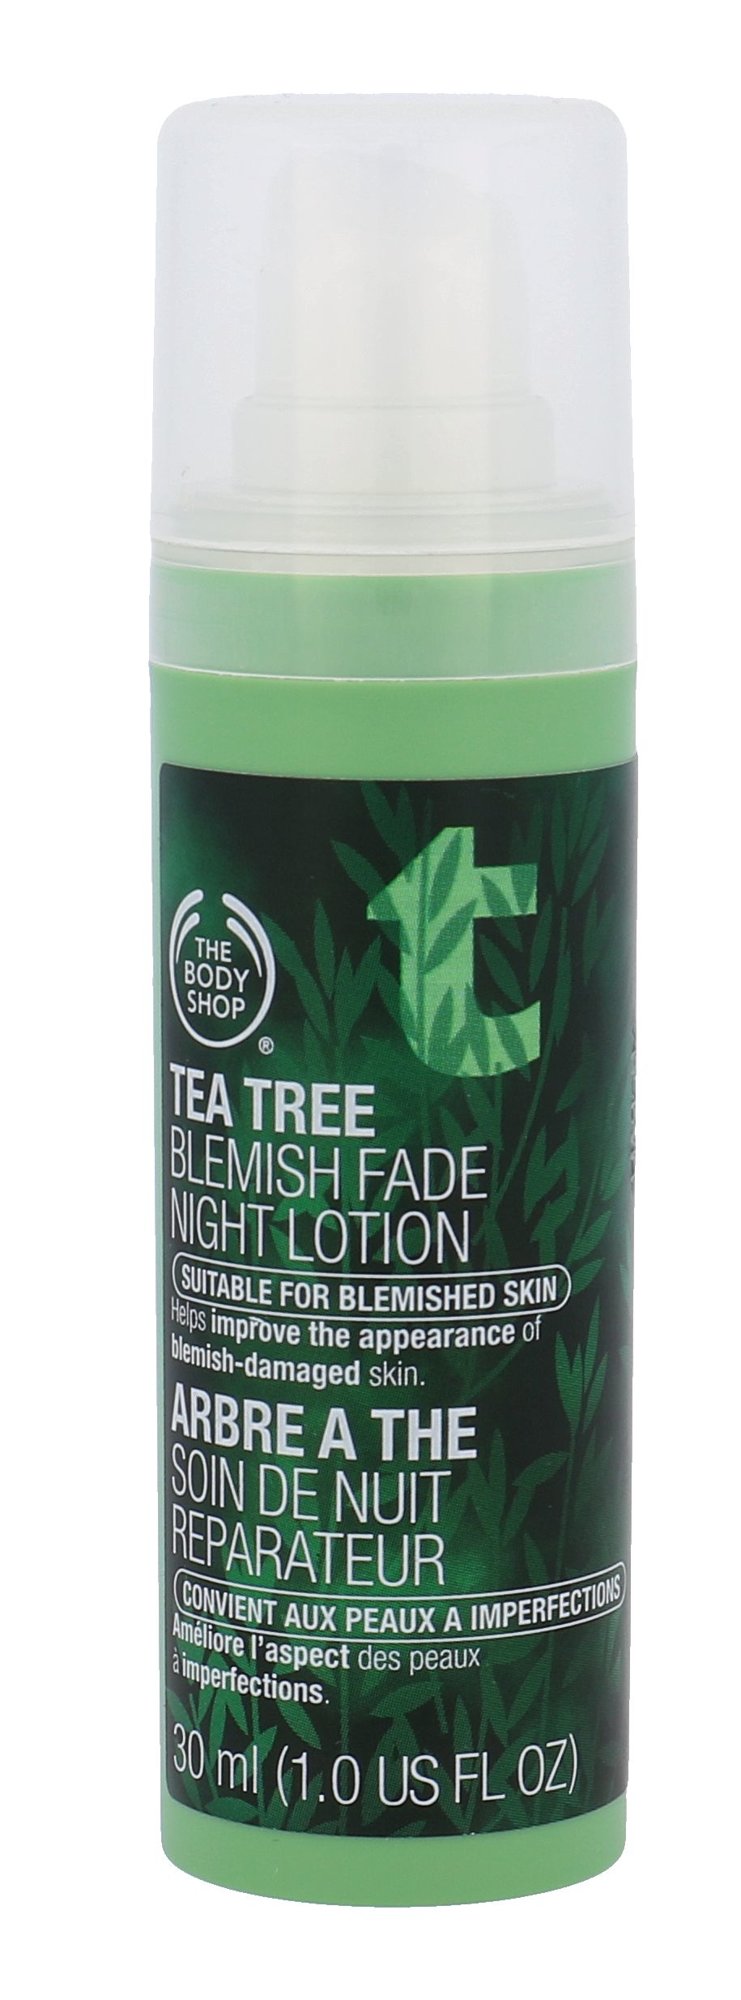 The Body Shop Tea Tree Blemish Fade Night Lotion